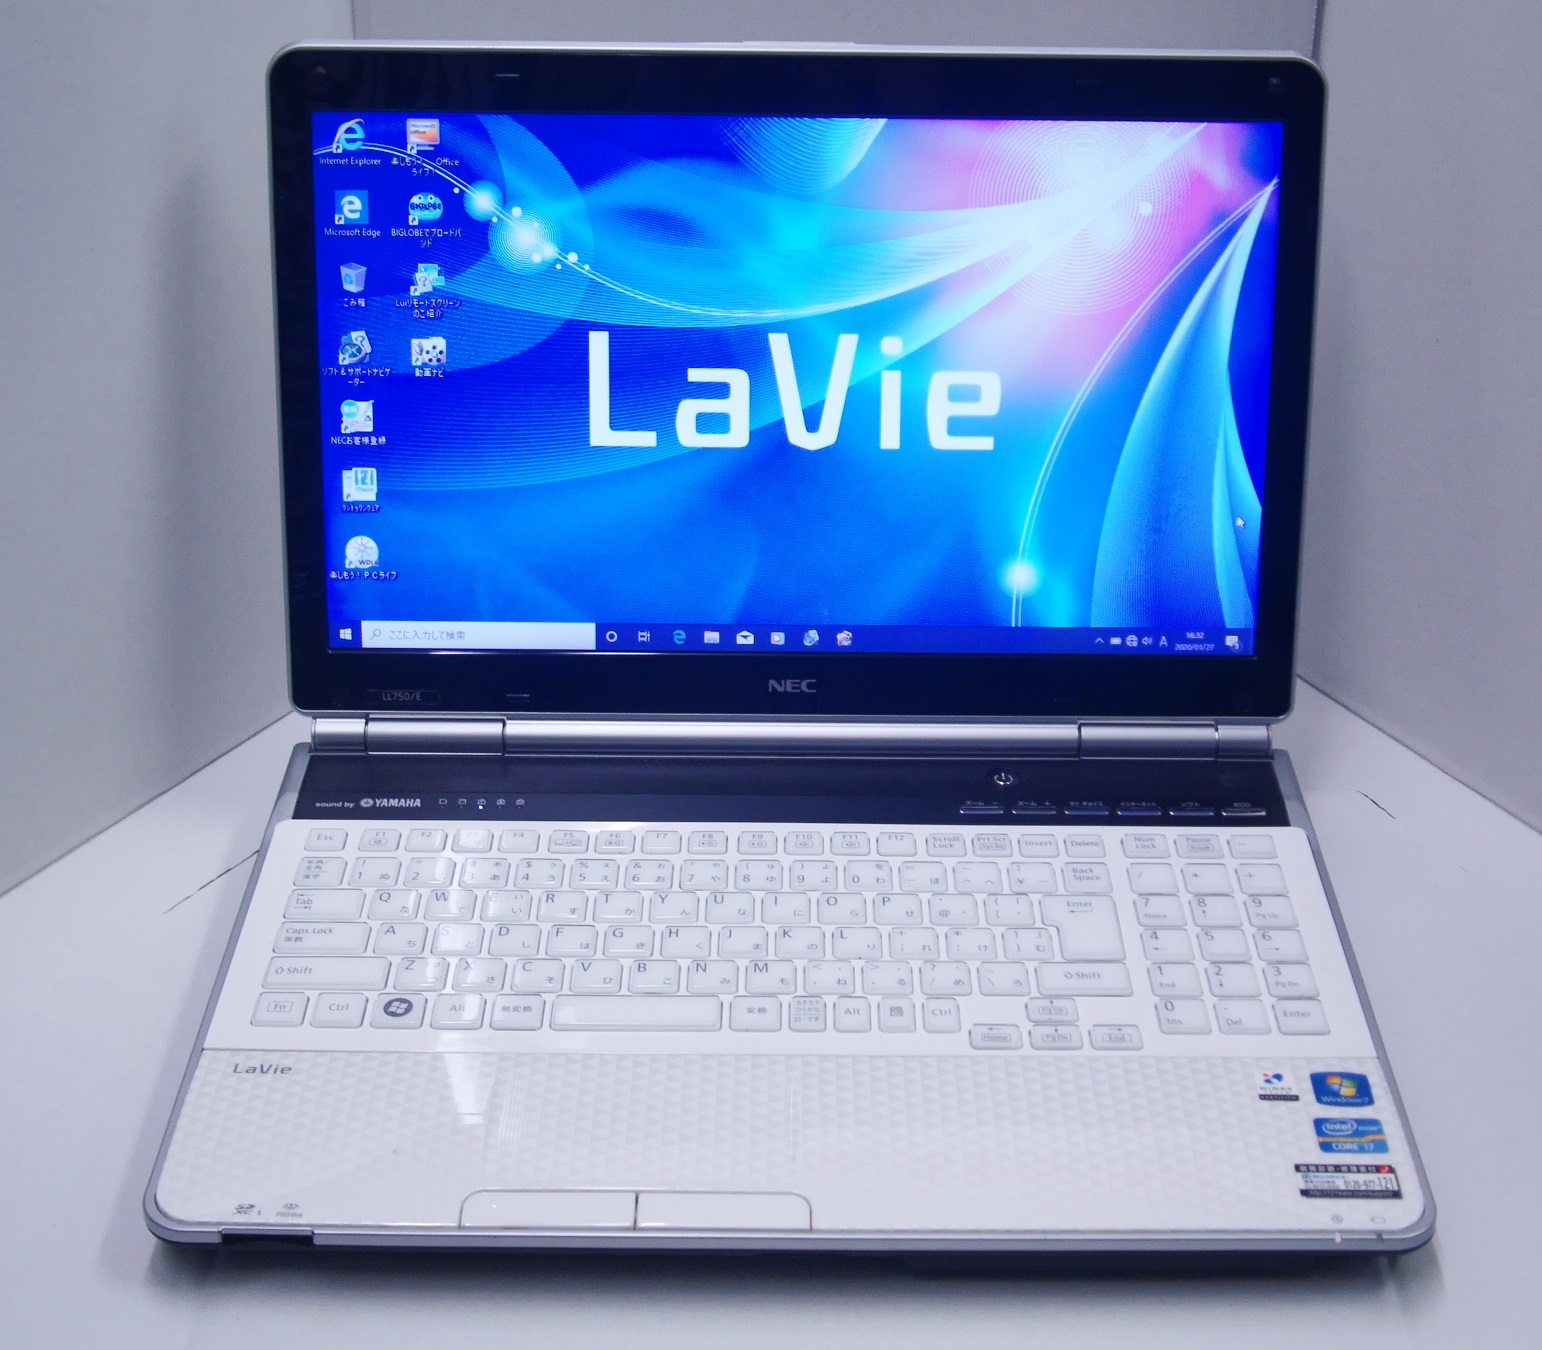 NEC LaVie PC-LL750/F CPU:Corei7 2630QM 2GHz / メモリ:8GB / HDD:750GB / BD /  15.6インチワイド / Windows10Home64bit 中古ノートパソコンが激安販売中！ 中古パソコン市場